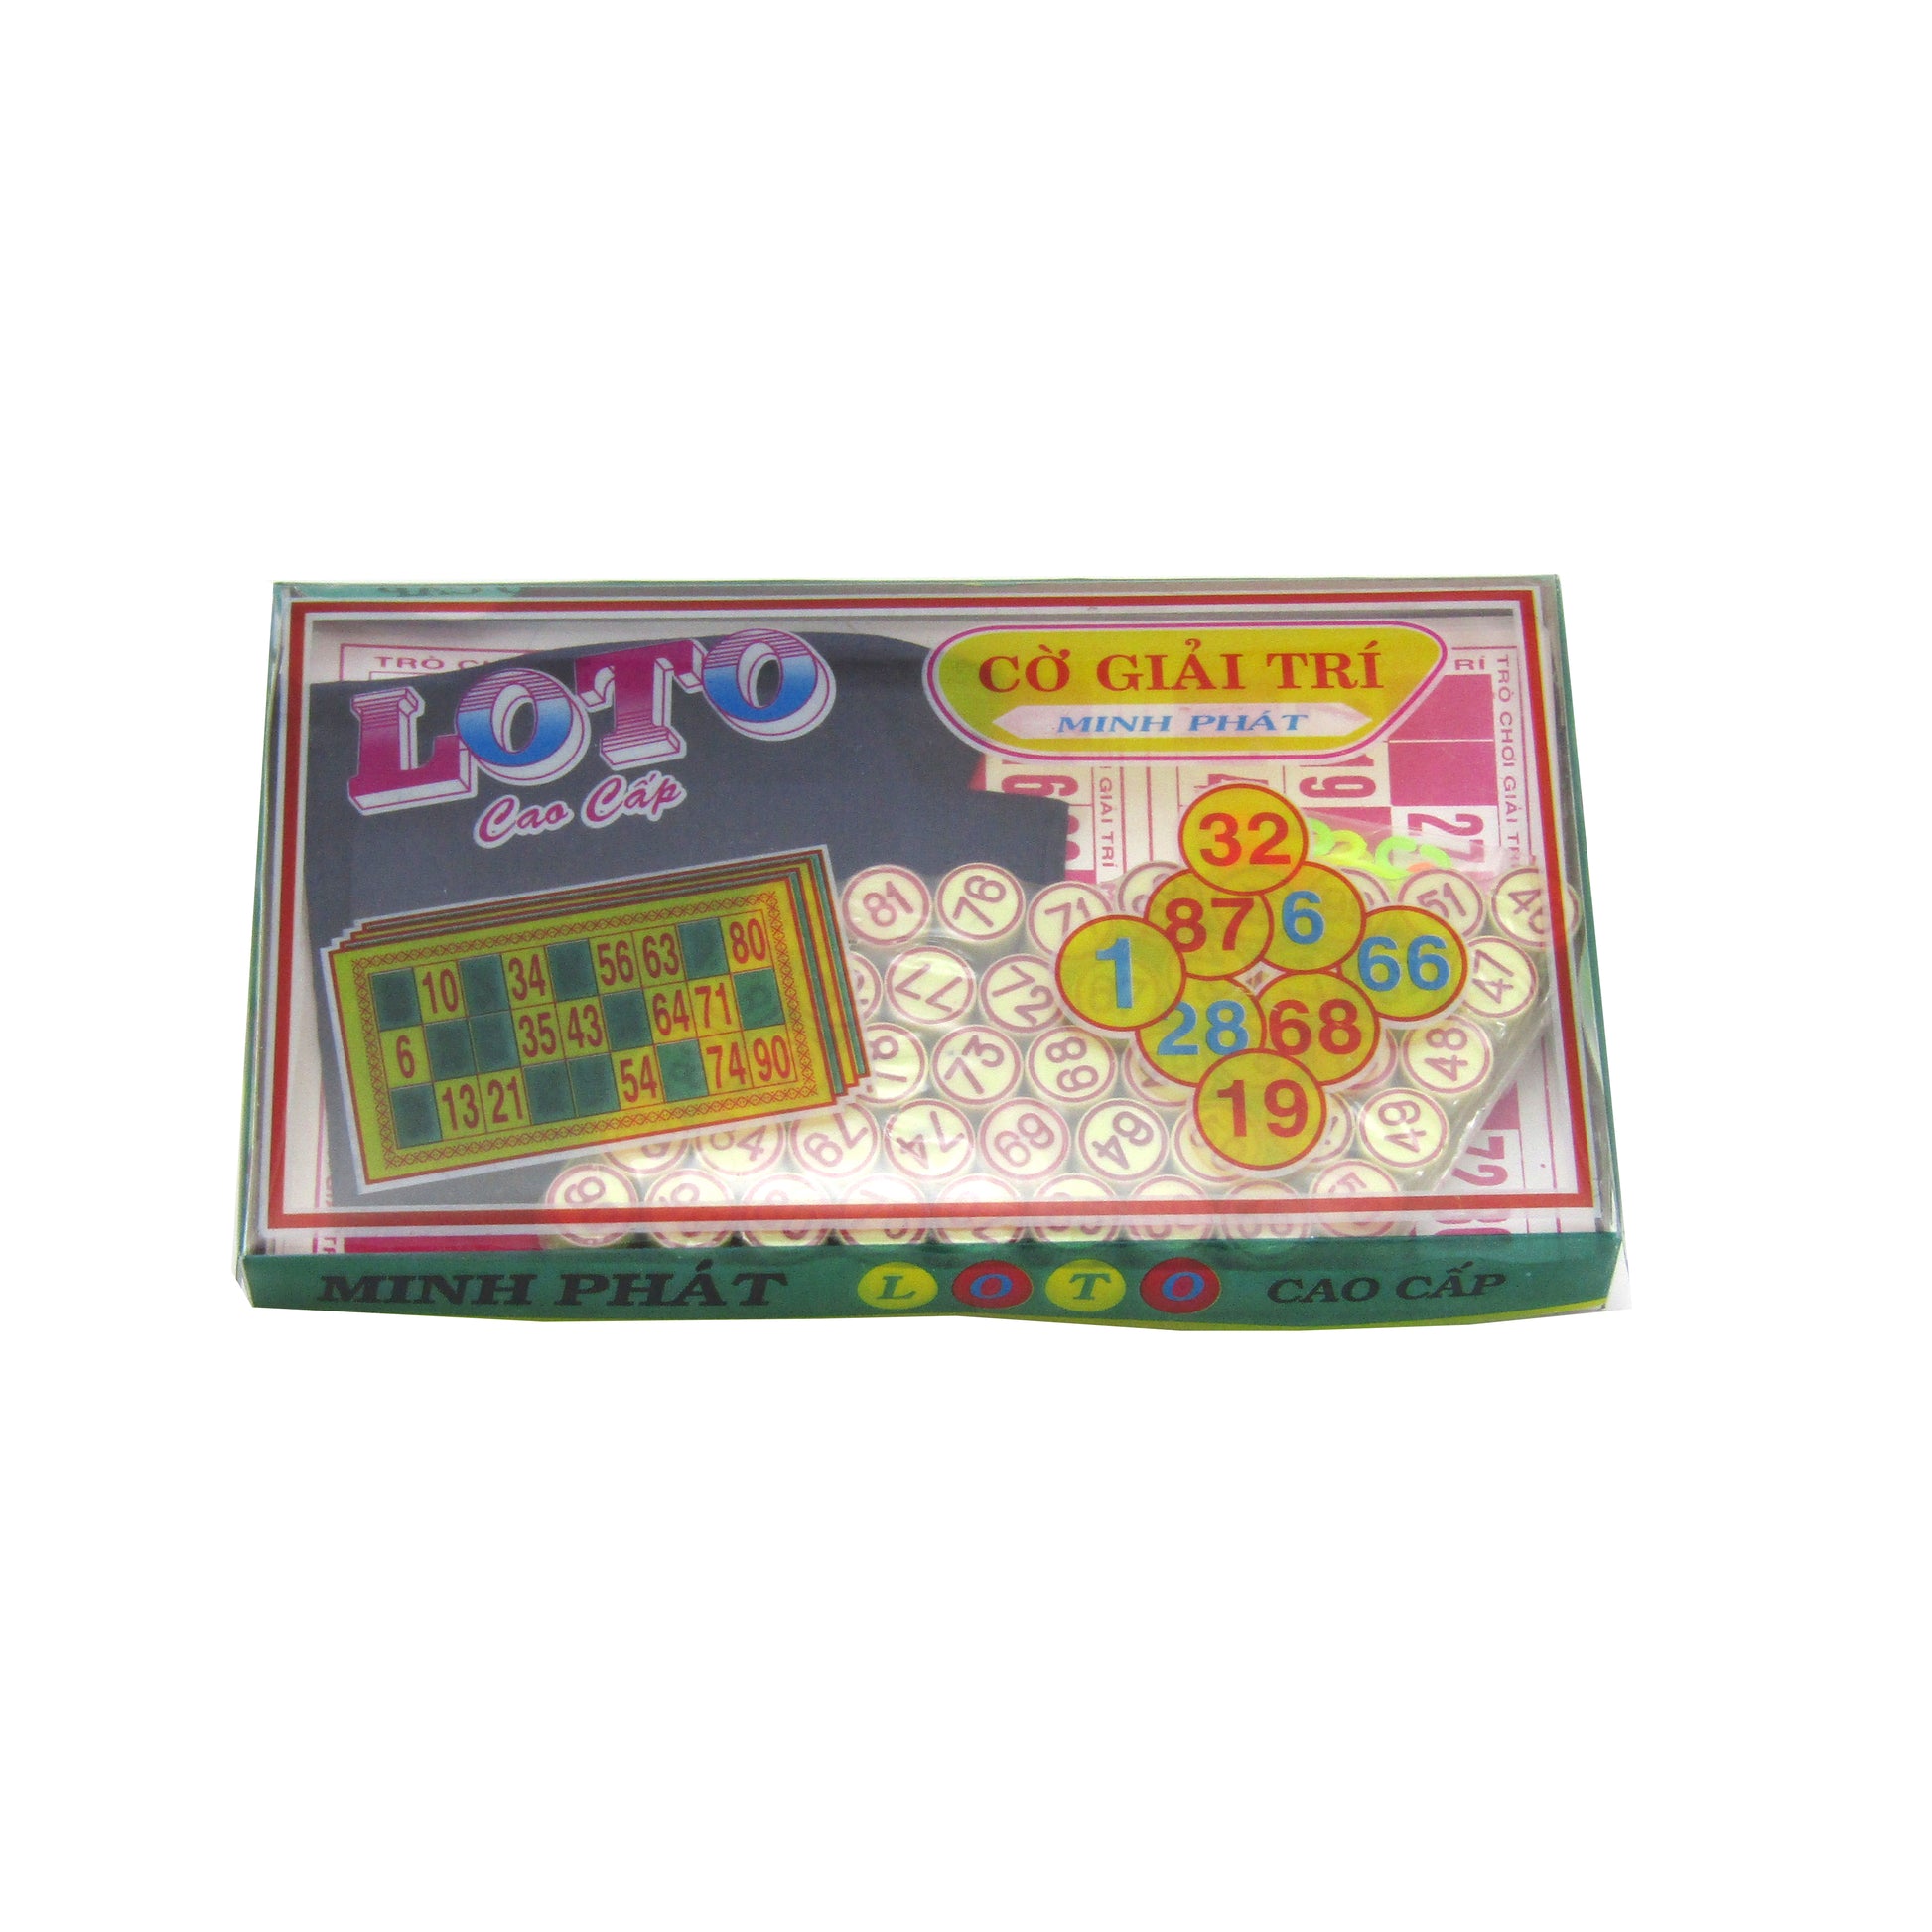 Lotto Bingo Lottery Game Lunar new year game